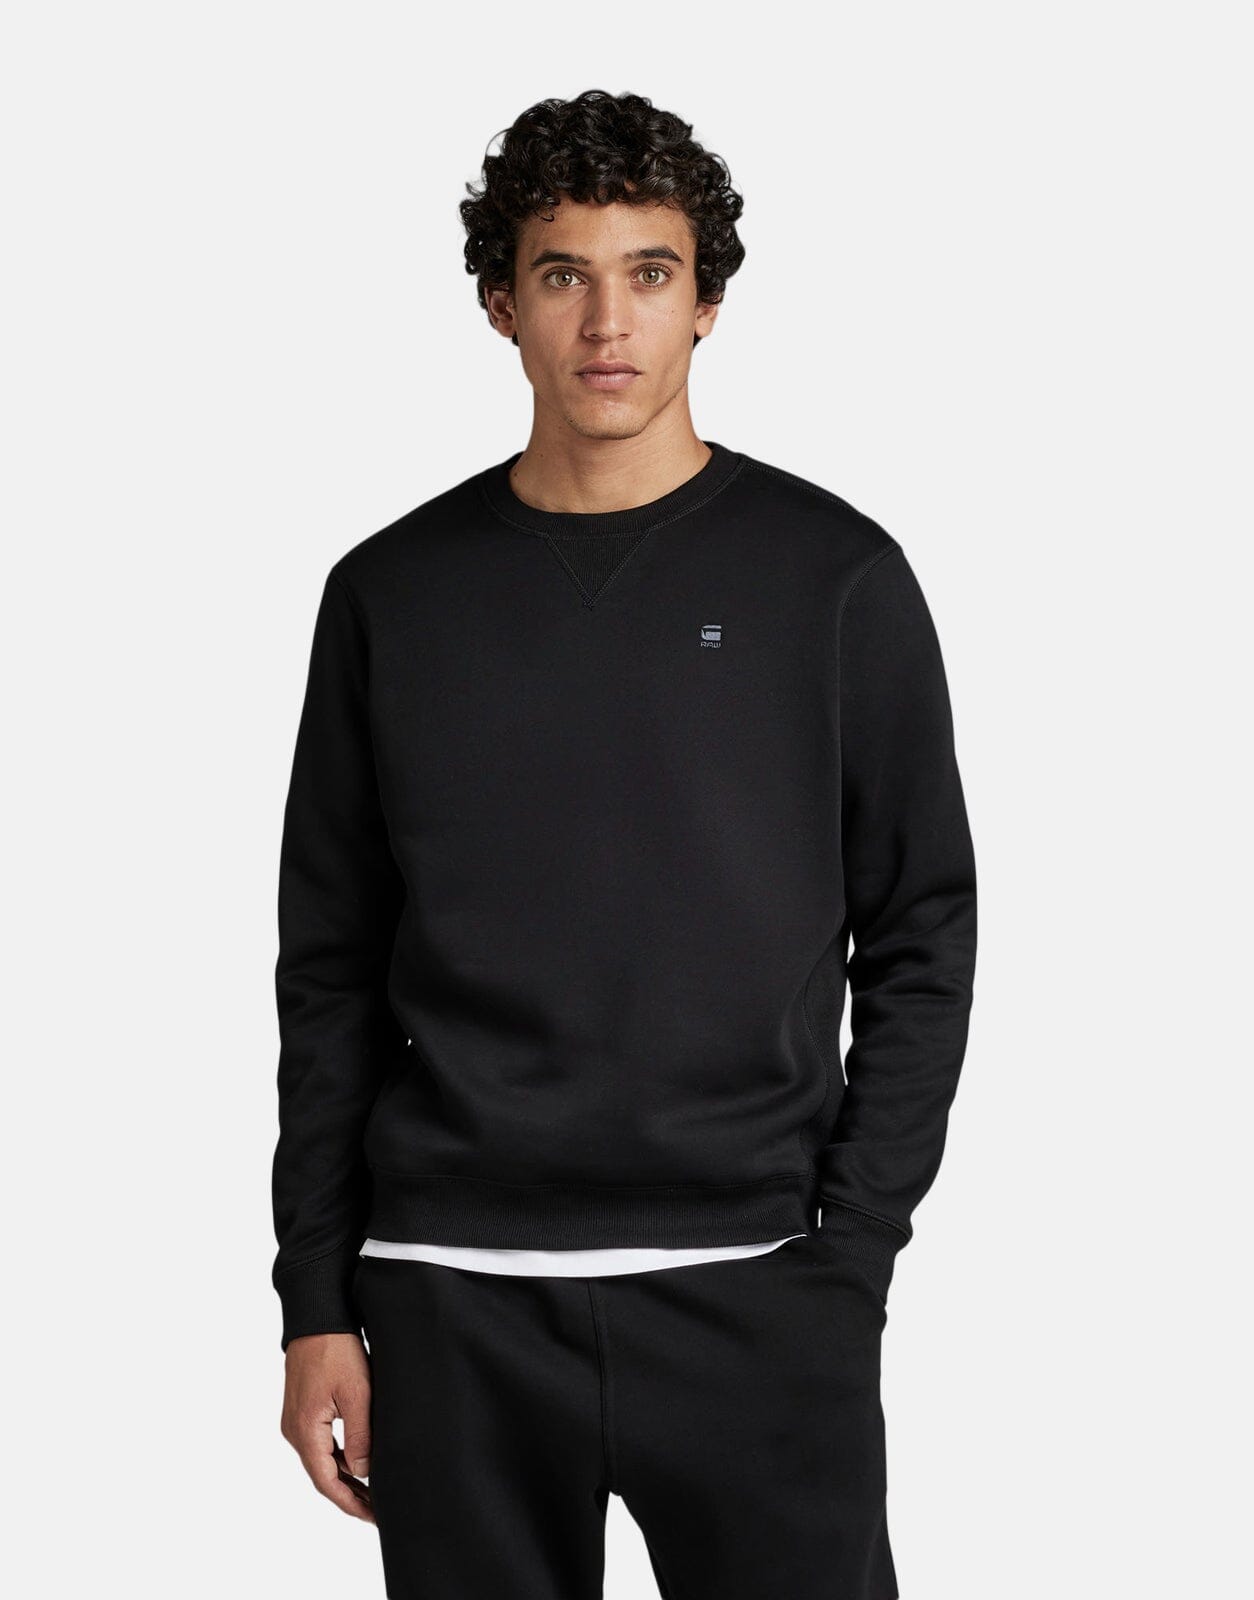 G-Star RAW Premium Core Dk Black Sweatshirt - Subwear